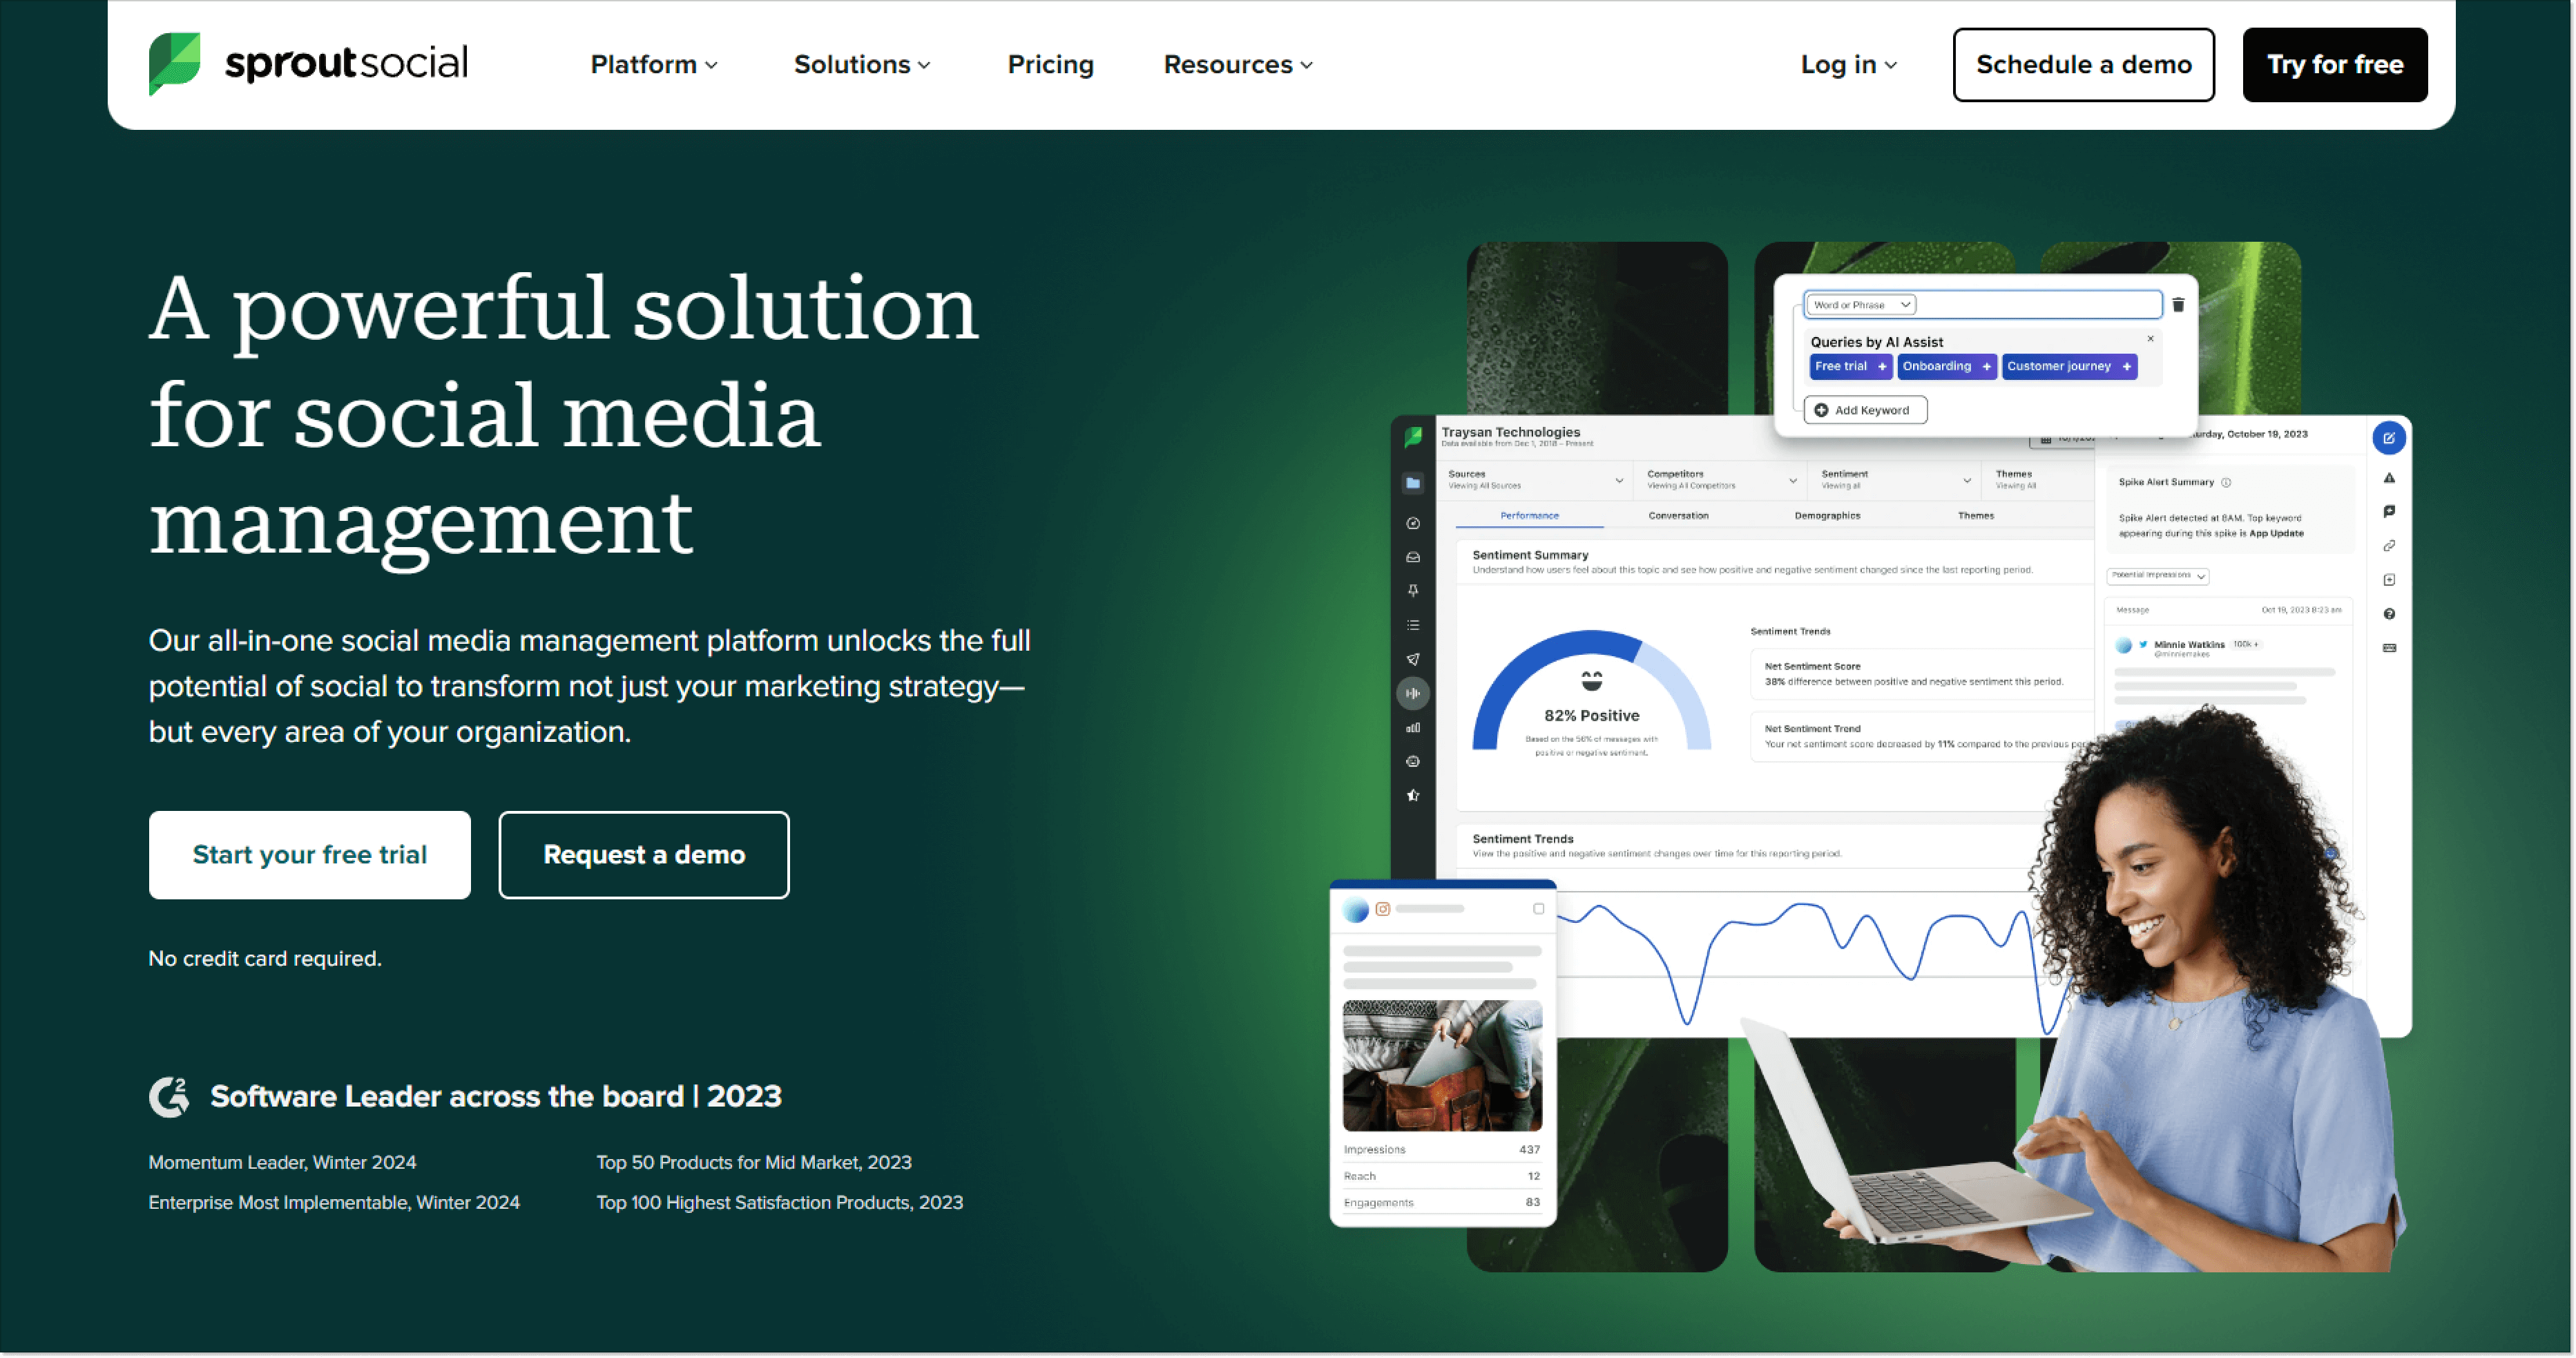 sprout social customer service software landing page screenshot